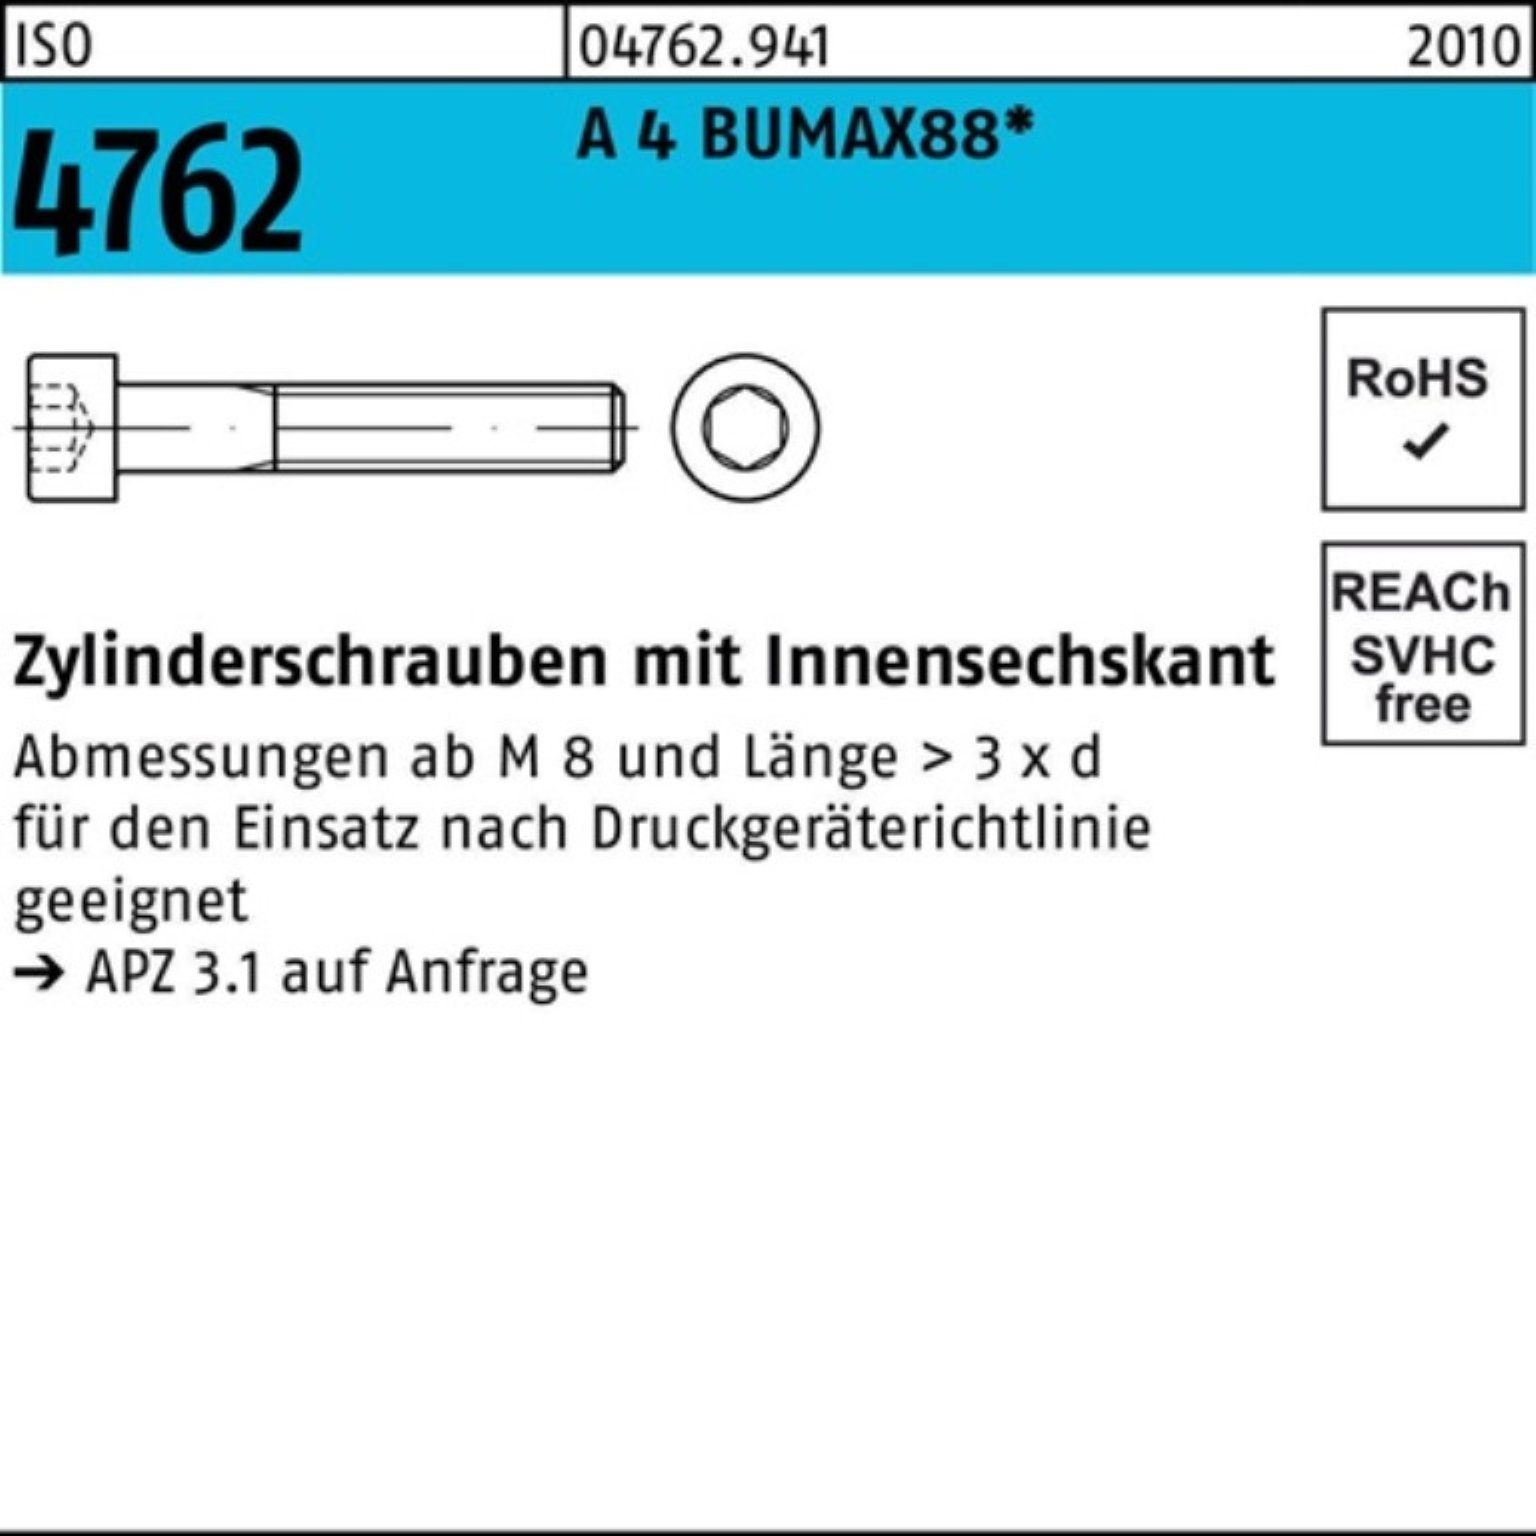 Bufab Zylinderschraube 100er M6x 100 ISO 50 Pack Zylinderschraube Innen-6kt BUMAX88 A 4 4762